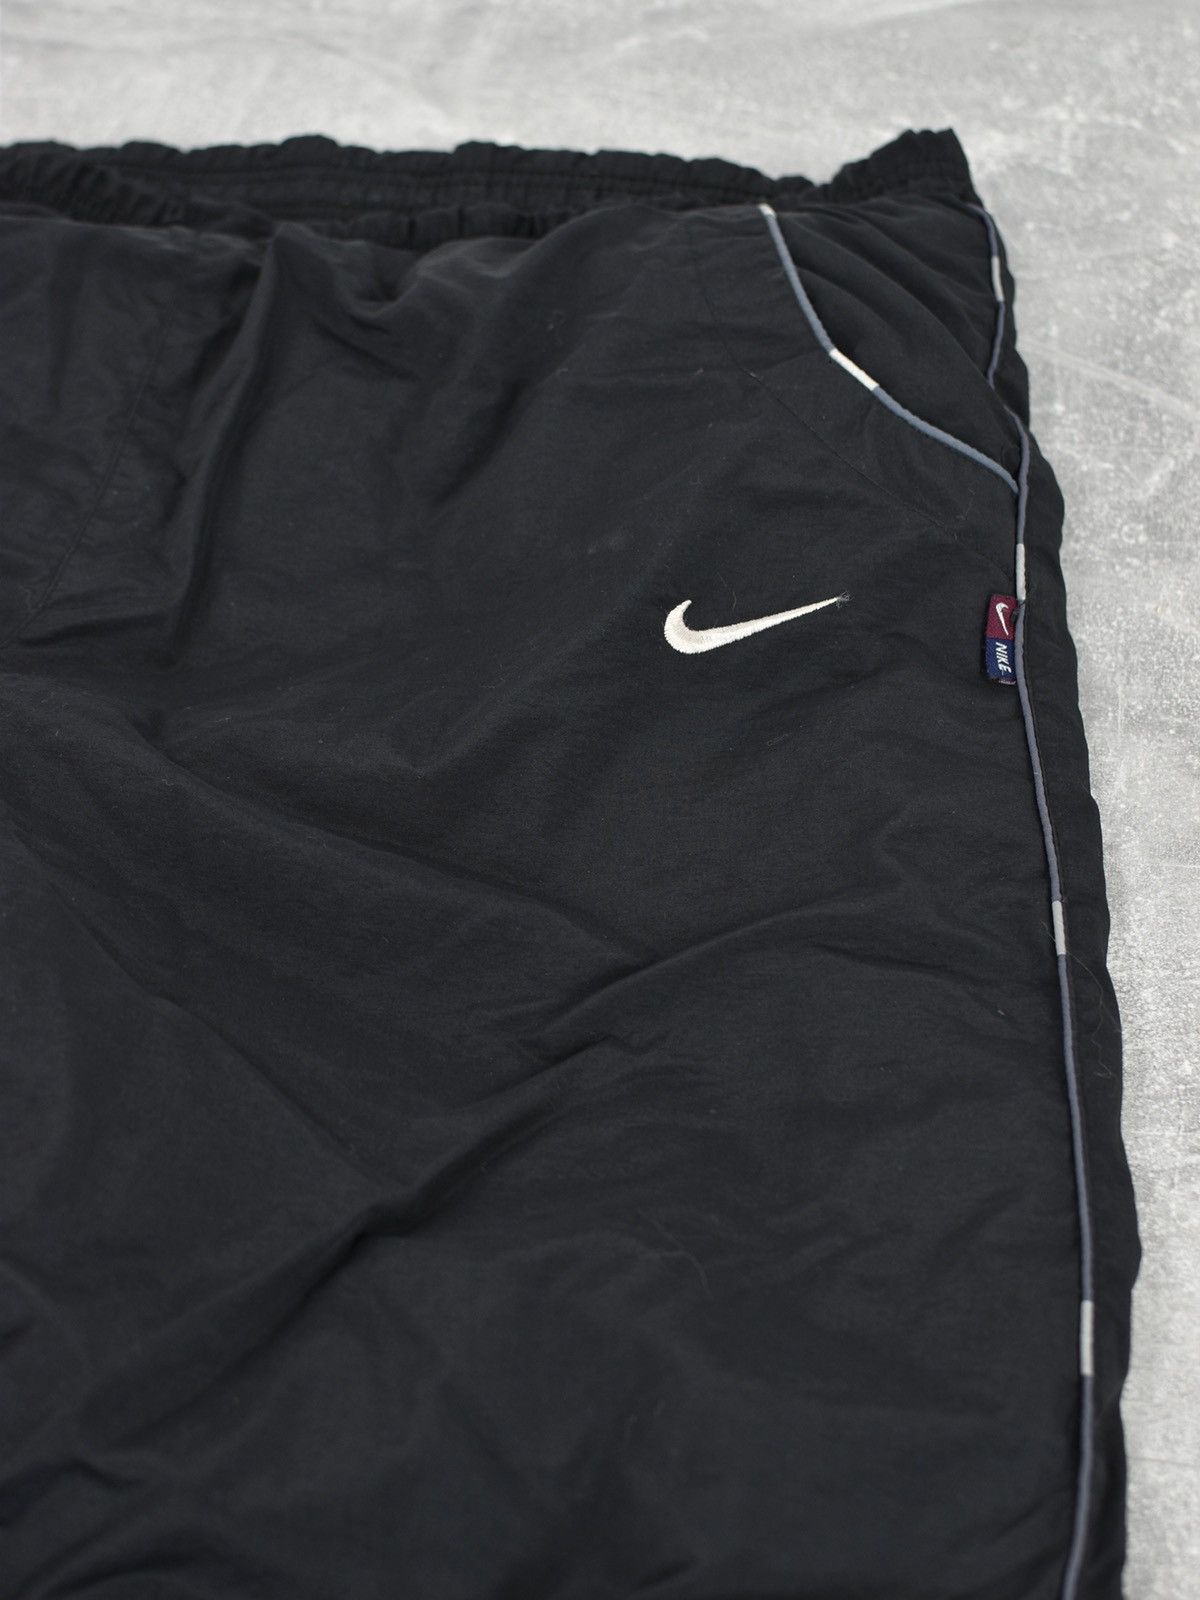 Nike Vintage Nike ACG Fleece Pants Size XL Size US 36 / EU 52 - 3 Thumbnail